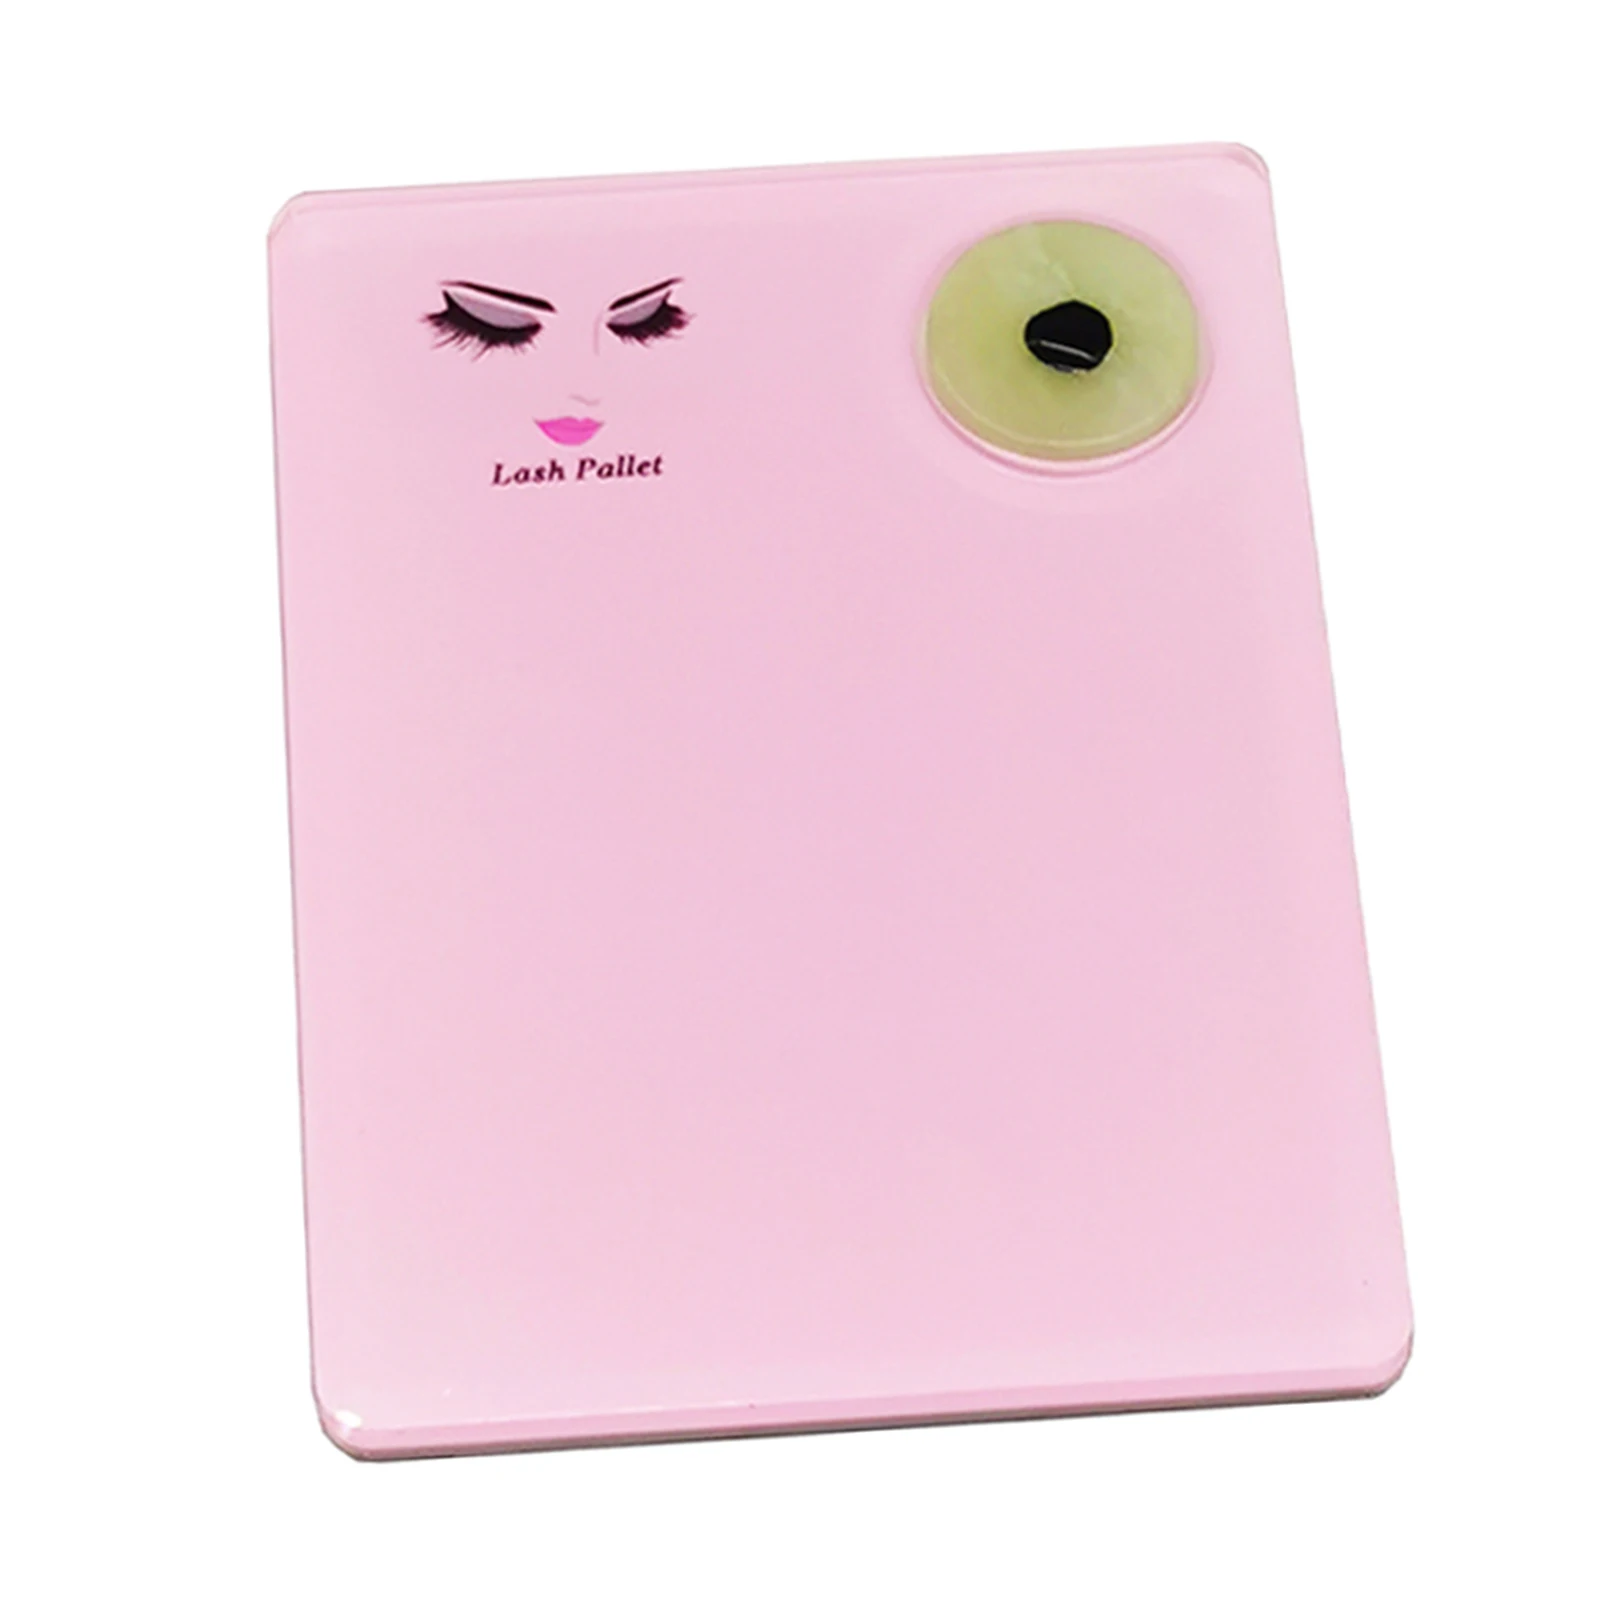 Acrylic Eyelash Extension Eye Lash Case Pallet Holder Display + Jade Stone